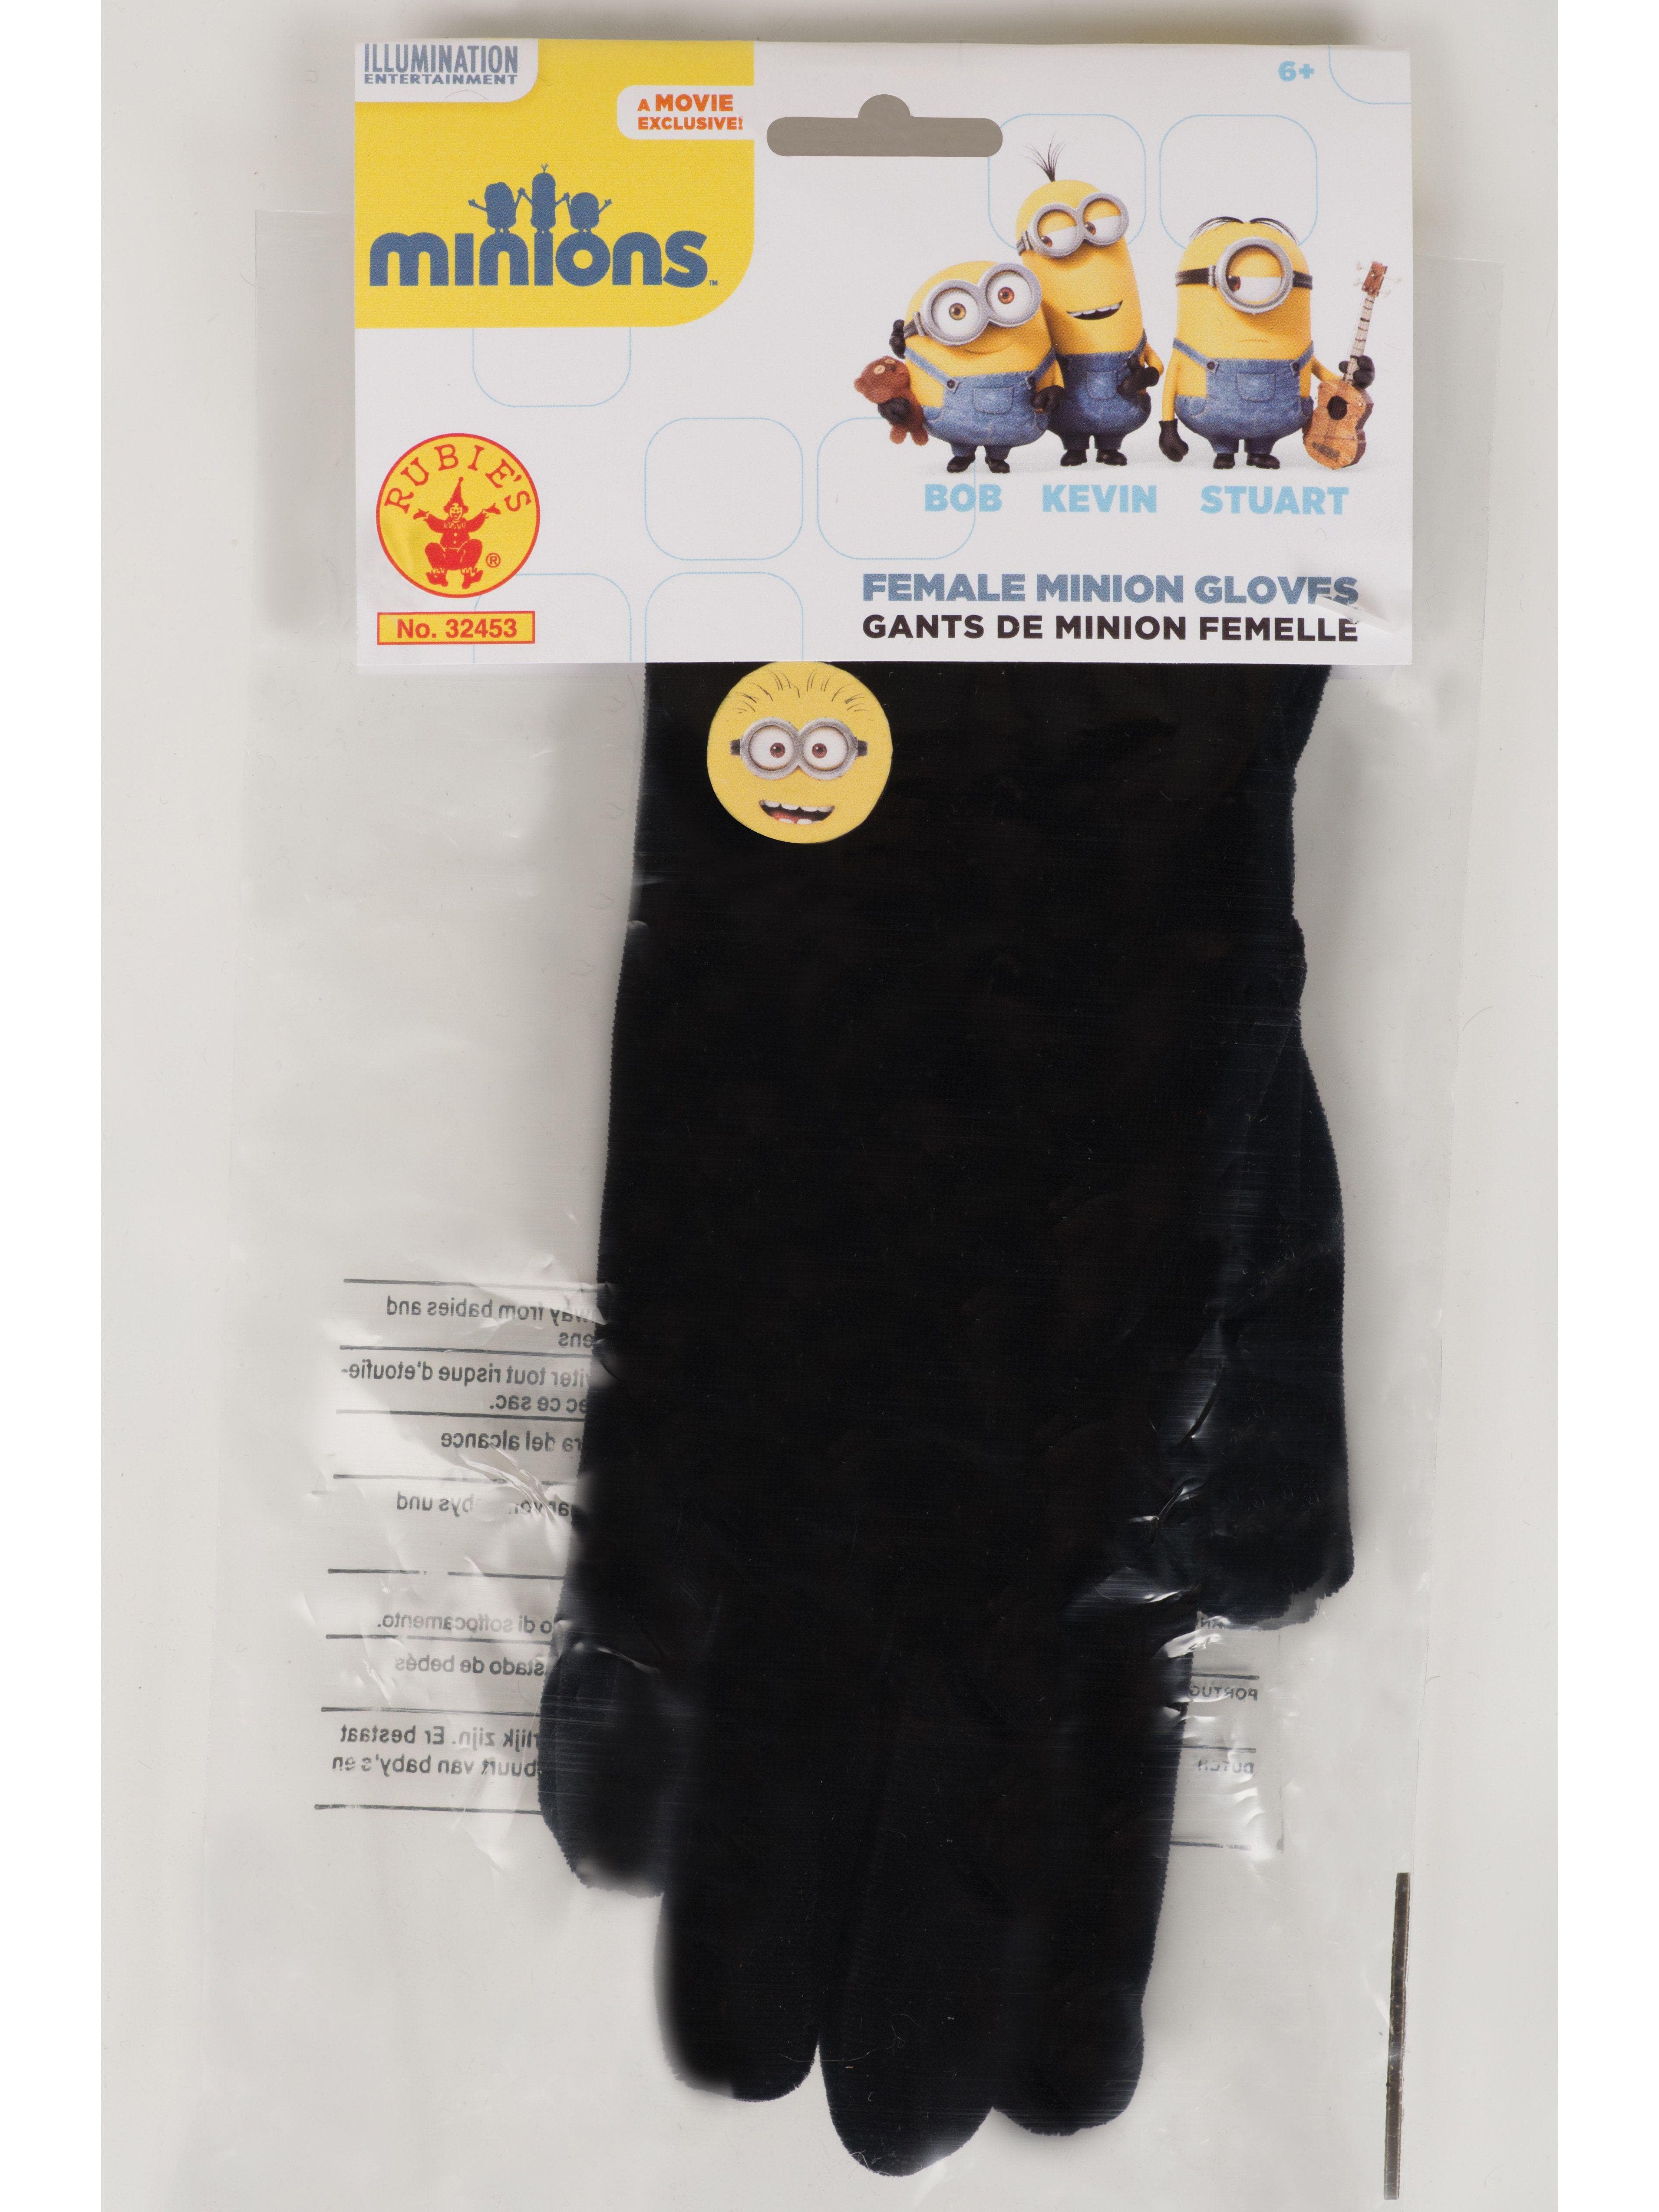 Girls' Black Minion Gloves - costumes.com